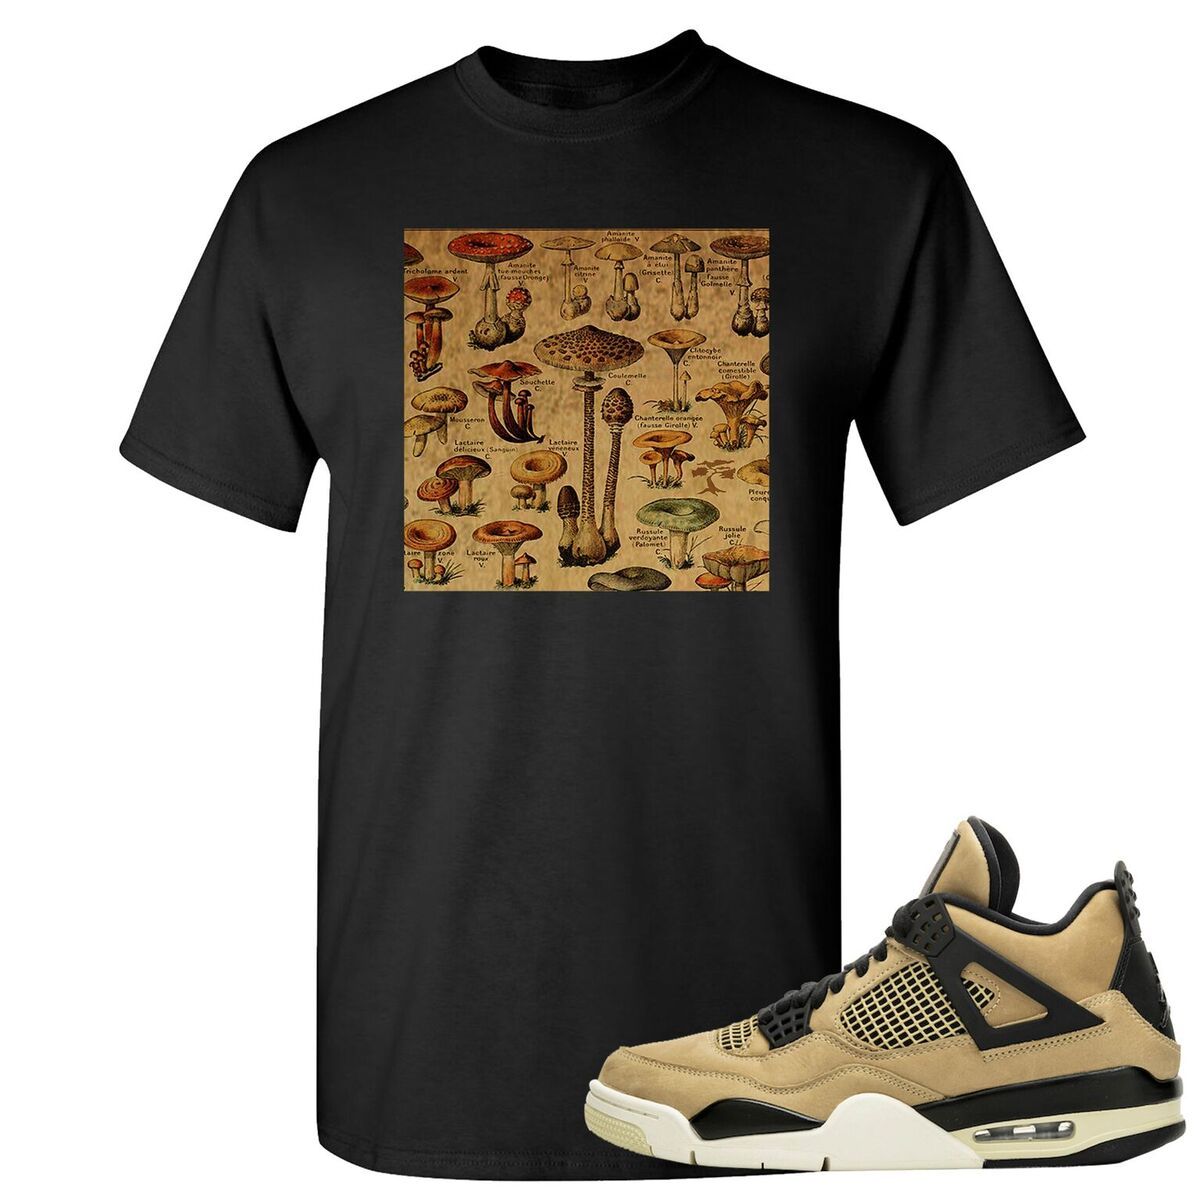 Jordan 4 WMNS Mushroom Sneaker Matching Black Mushroom Chart Tee Shirt